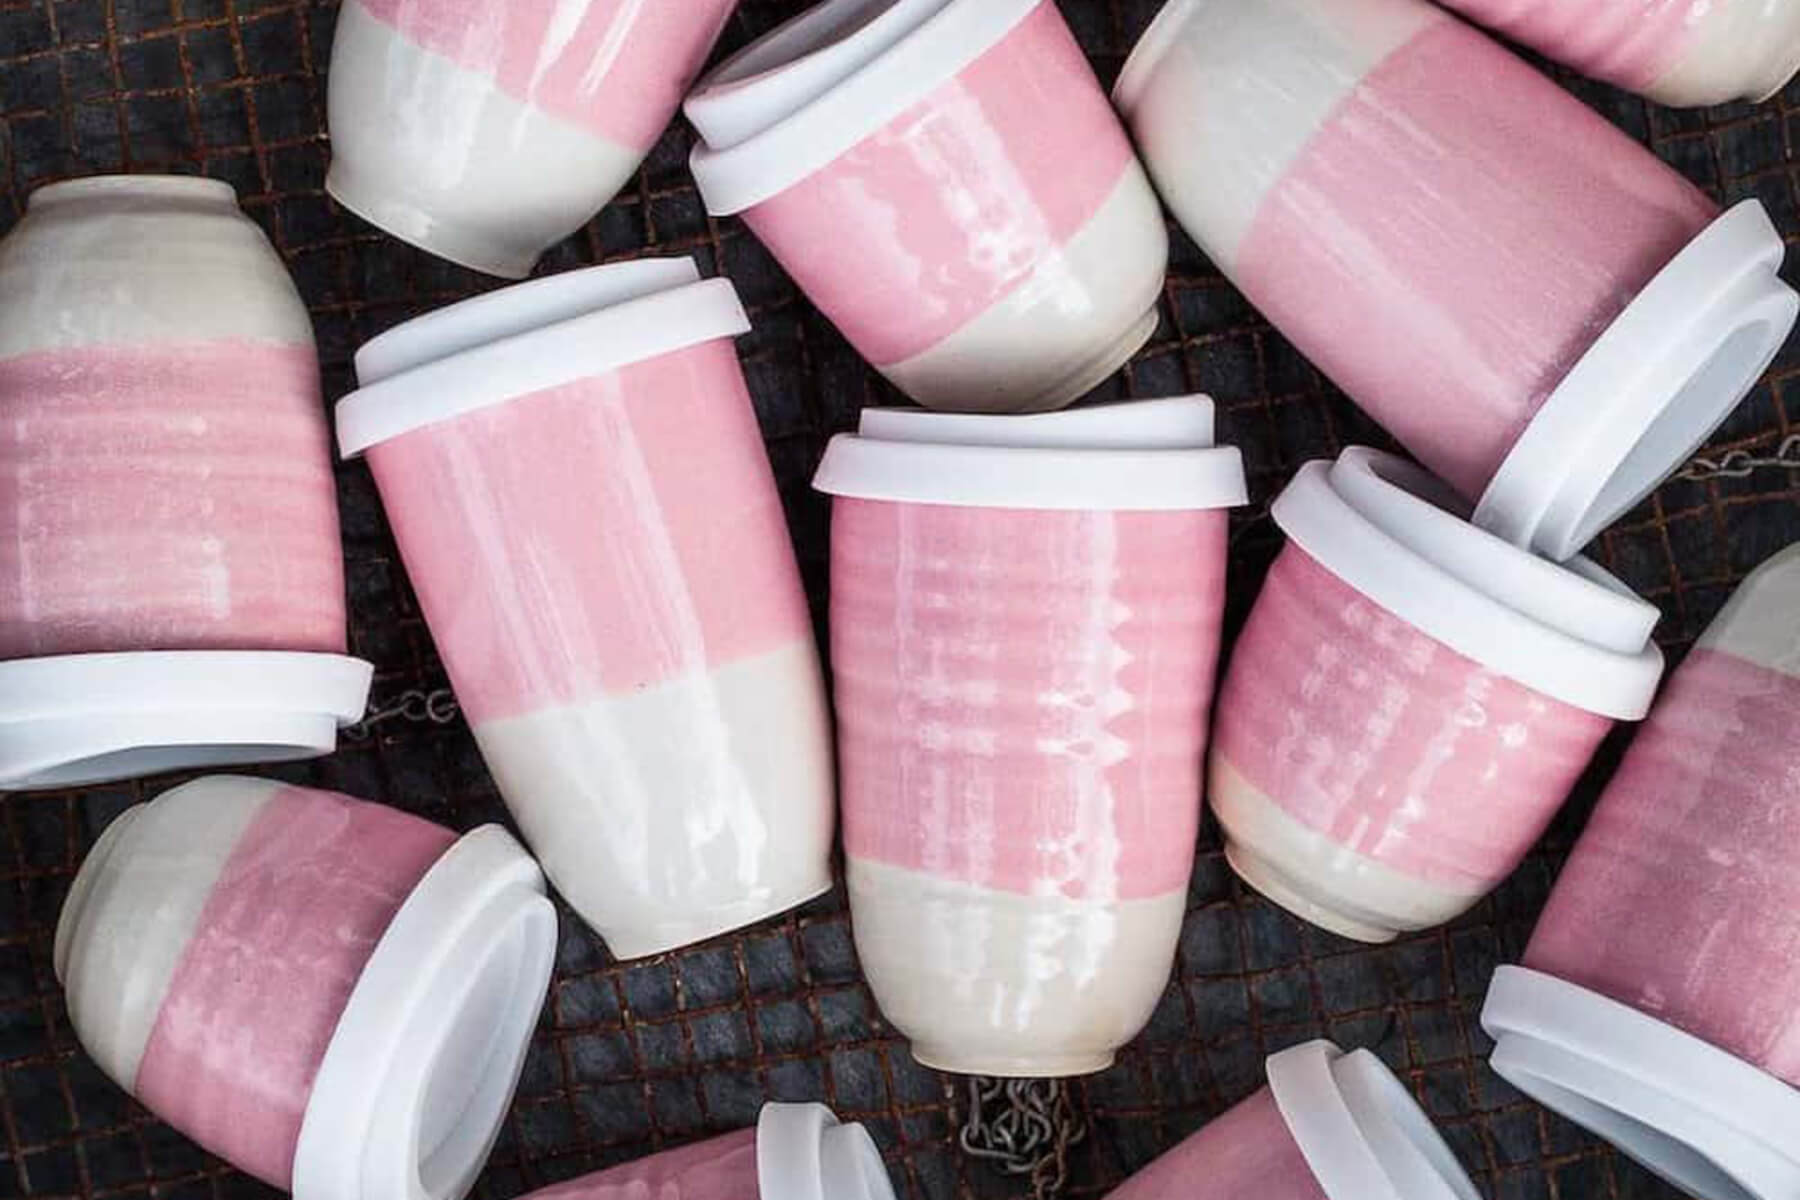 A dozen pink and white reusable cups